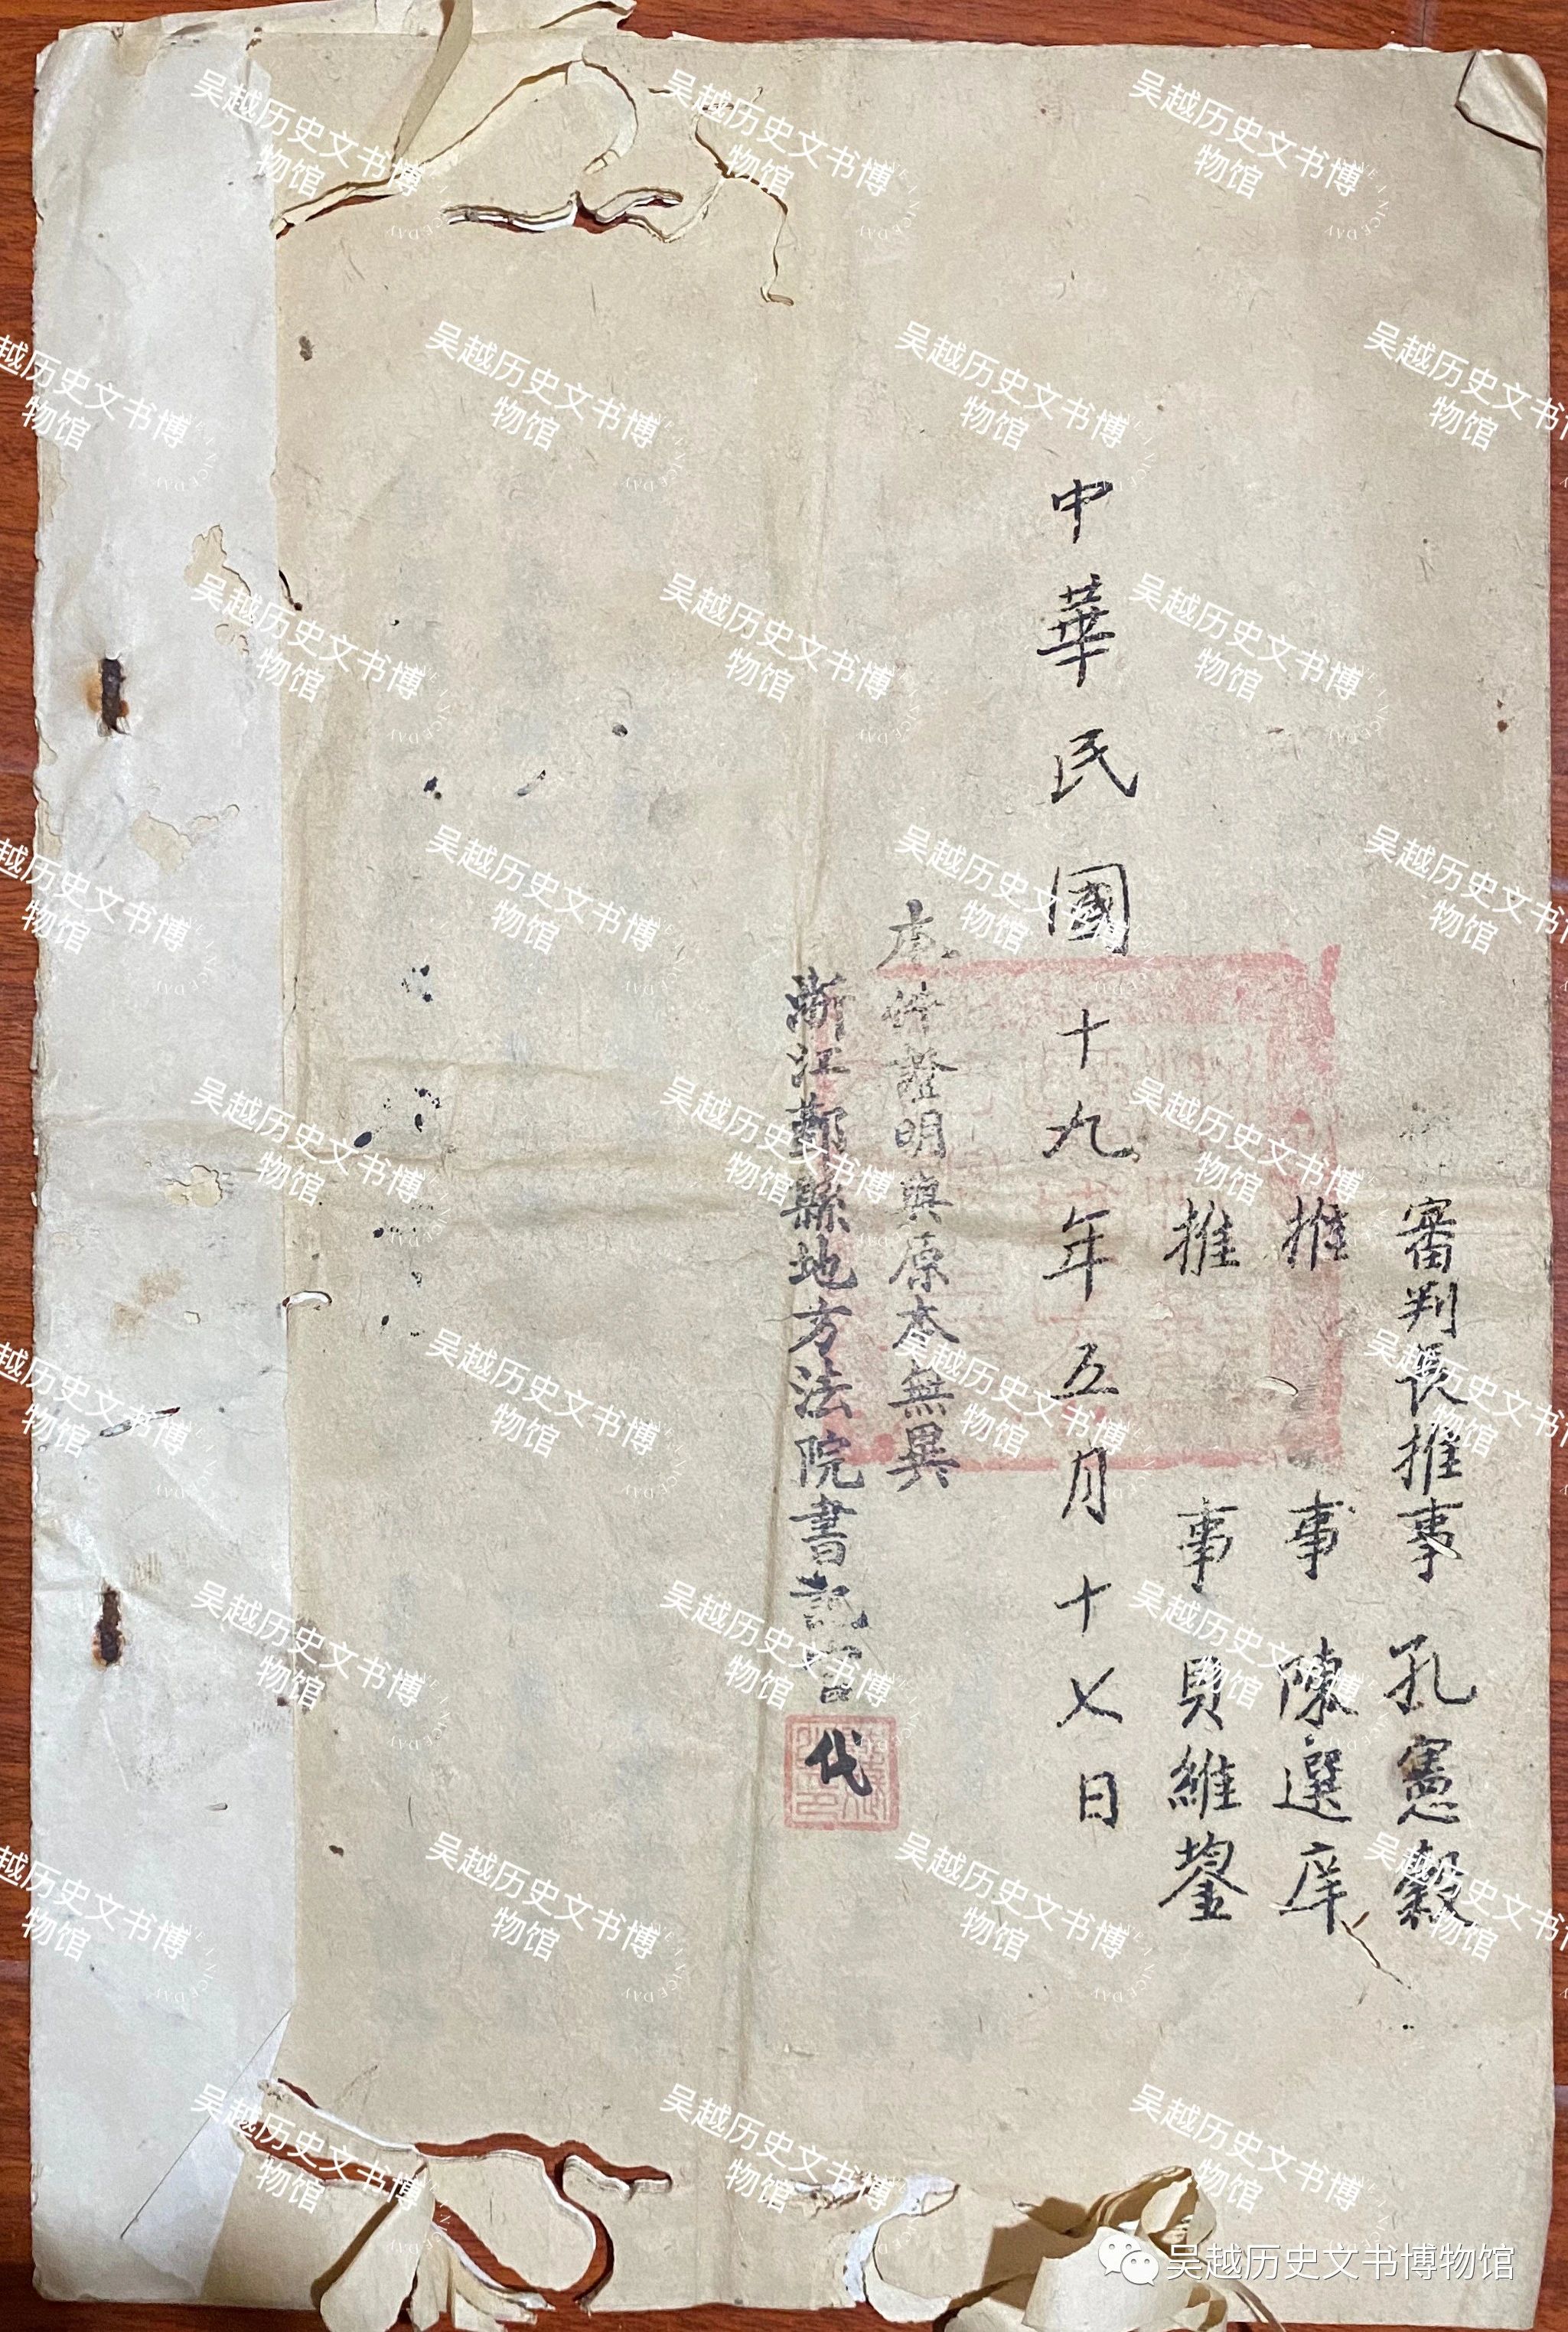 File:1930-05-17 浙江鄞縣地方法院判決正本04.jpg - Wikimedia Commons